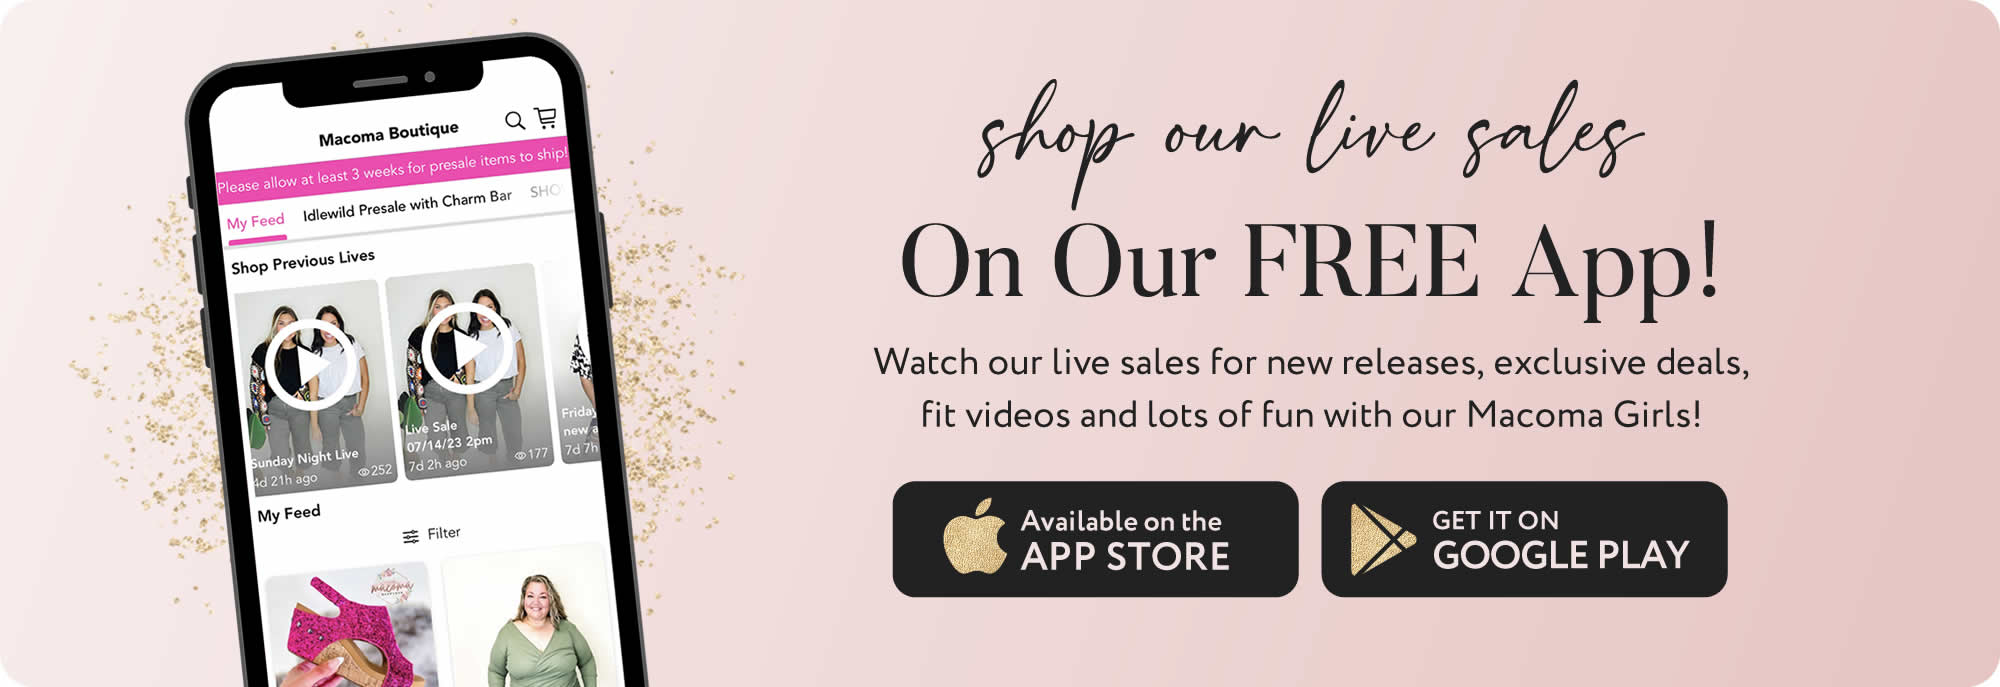 Shop our live sales on our App!